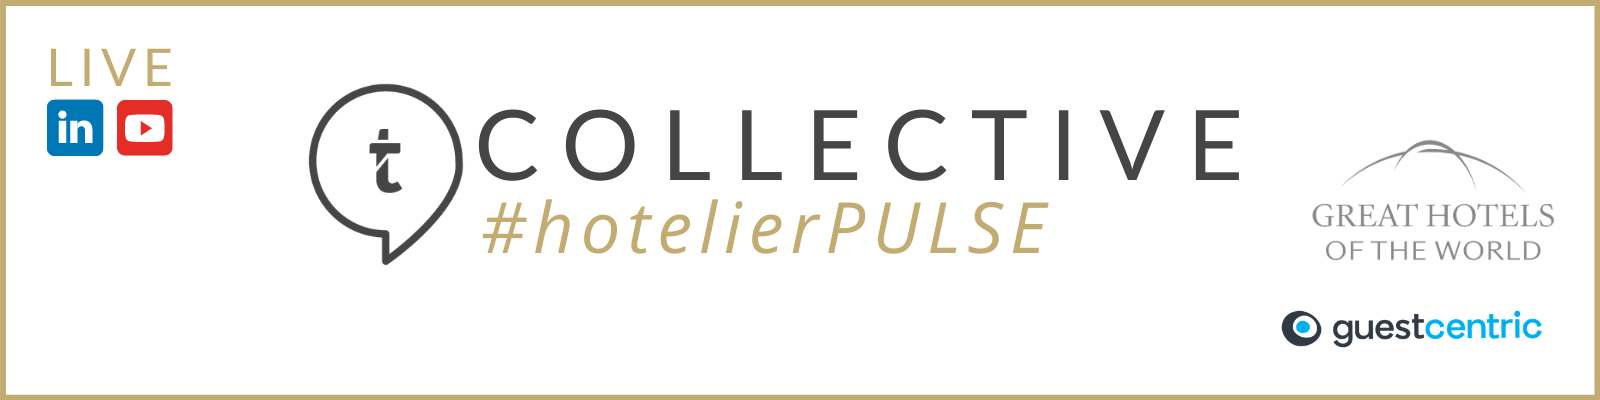 COLLECTIVE #hotelierPULSE - Live Think Tank